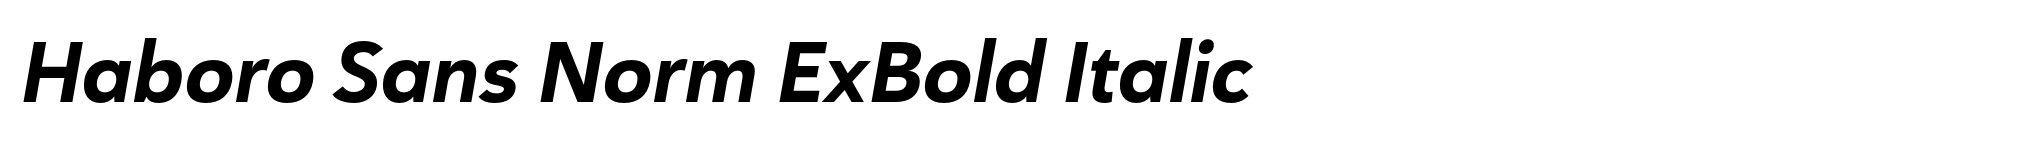 Haboro Sans Norm ExBold Italic image